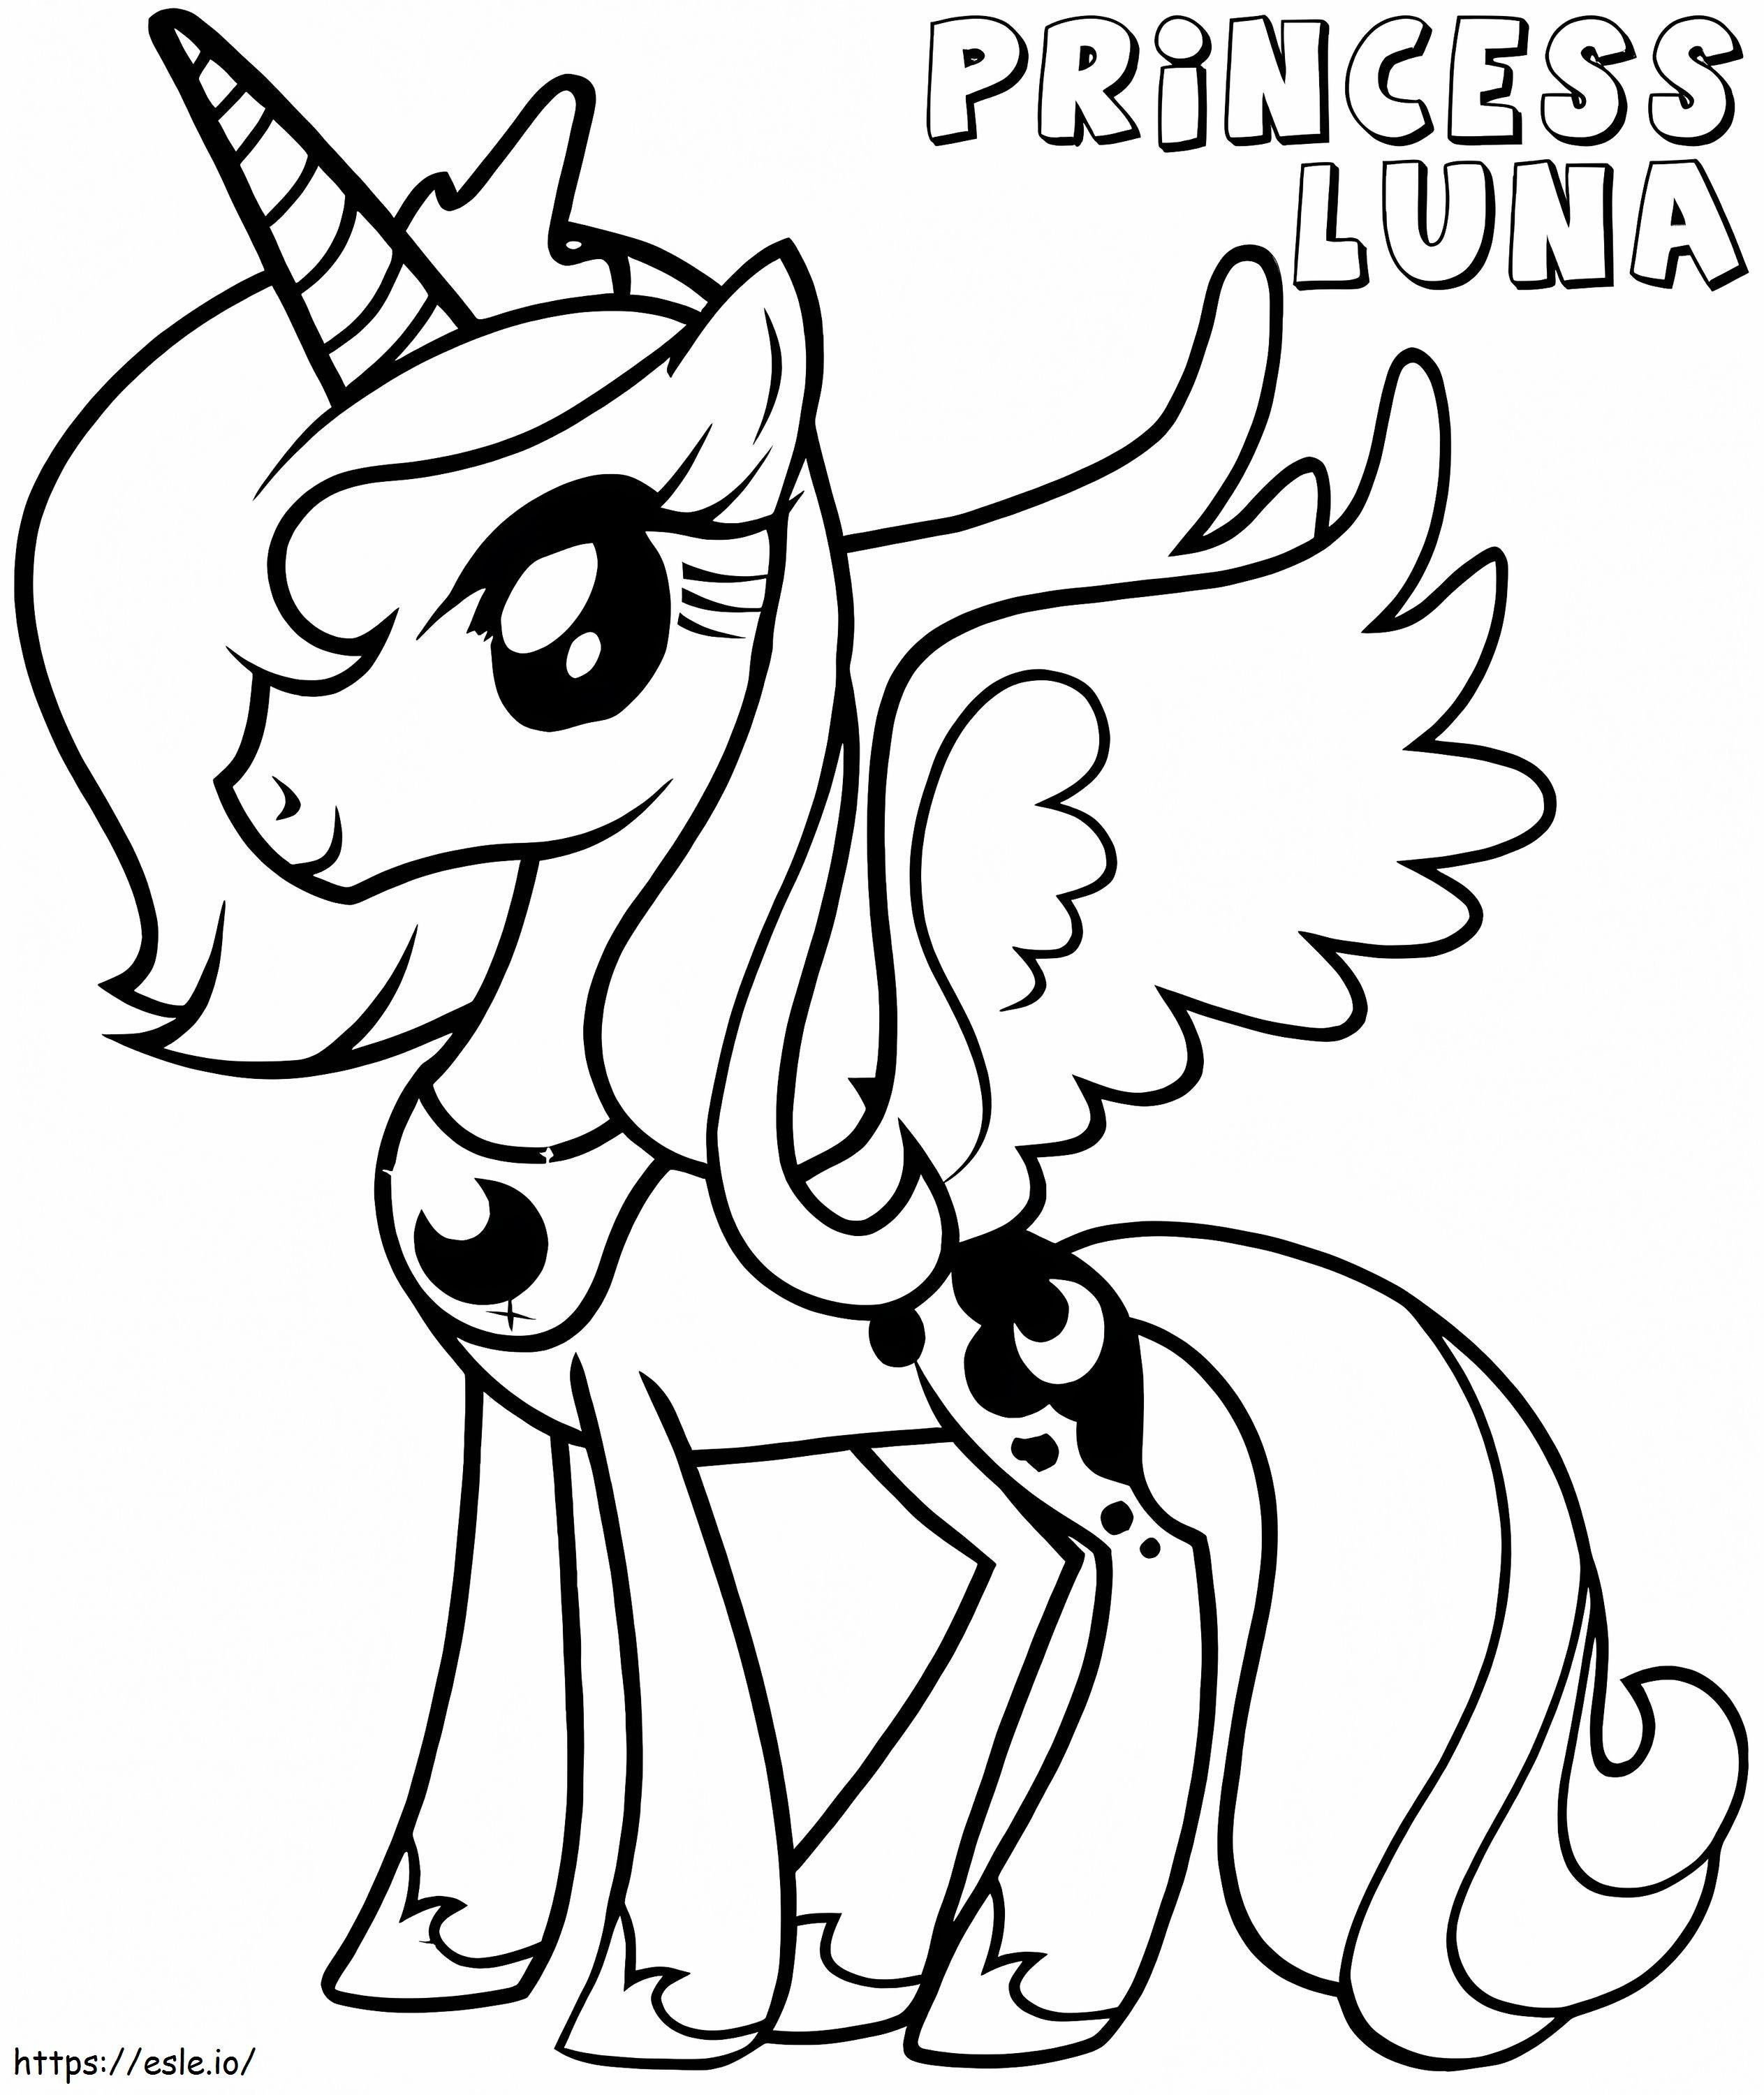 Princesinha Luna para colorir